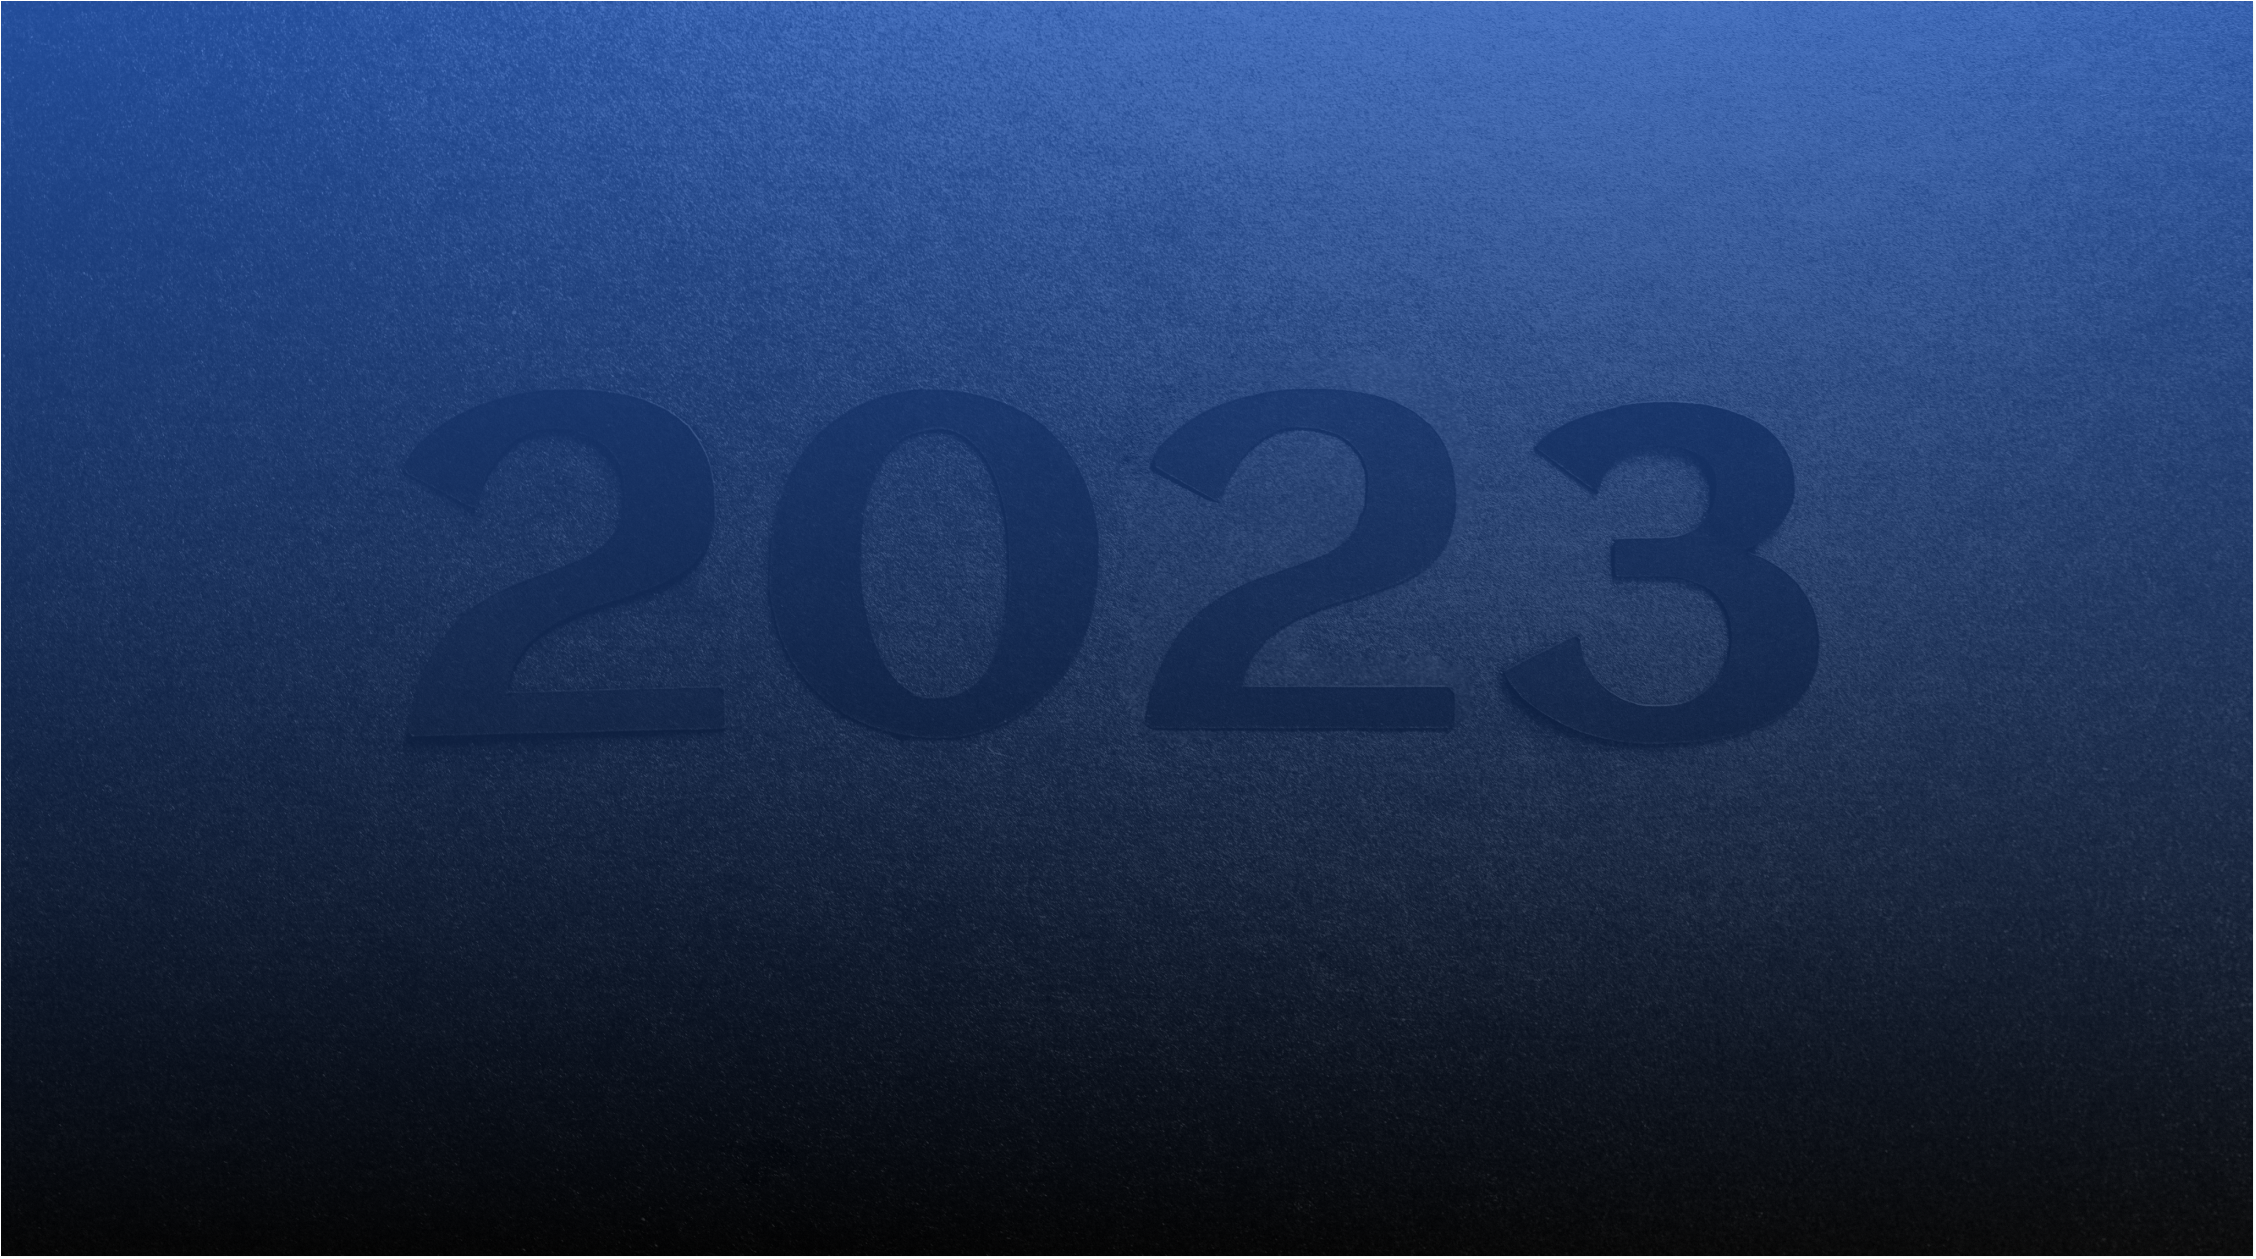 Our digital procurement predictions for 2023